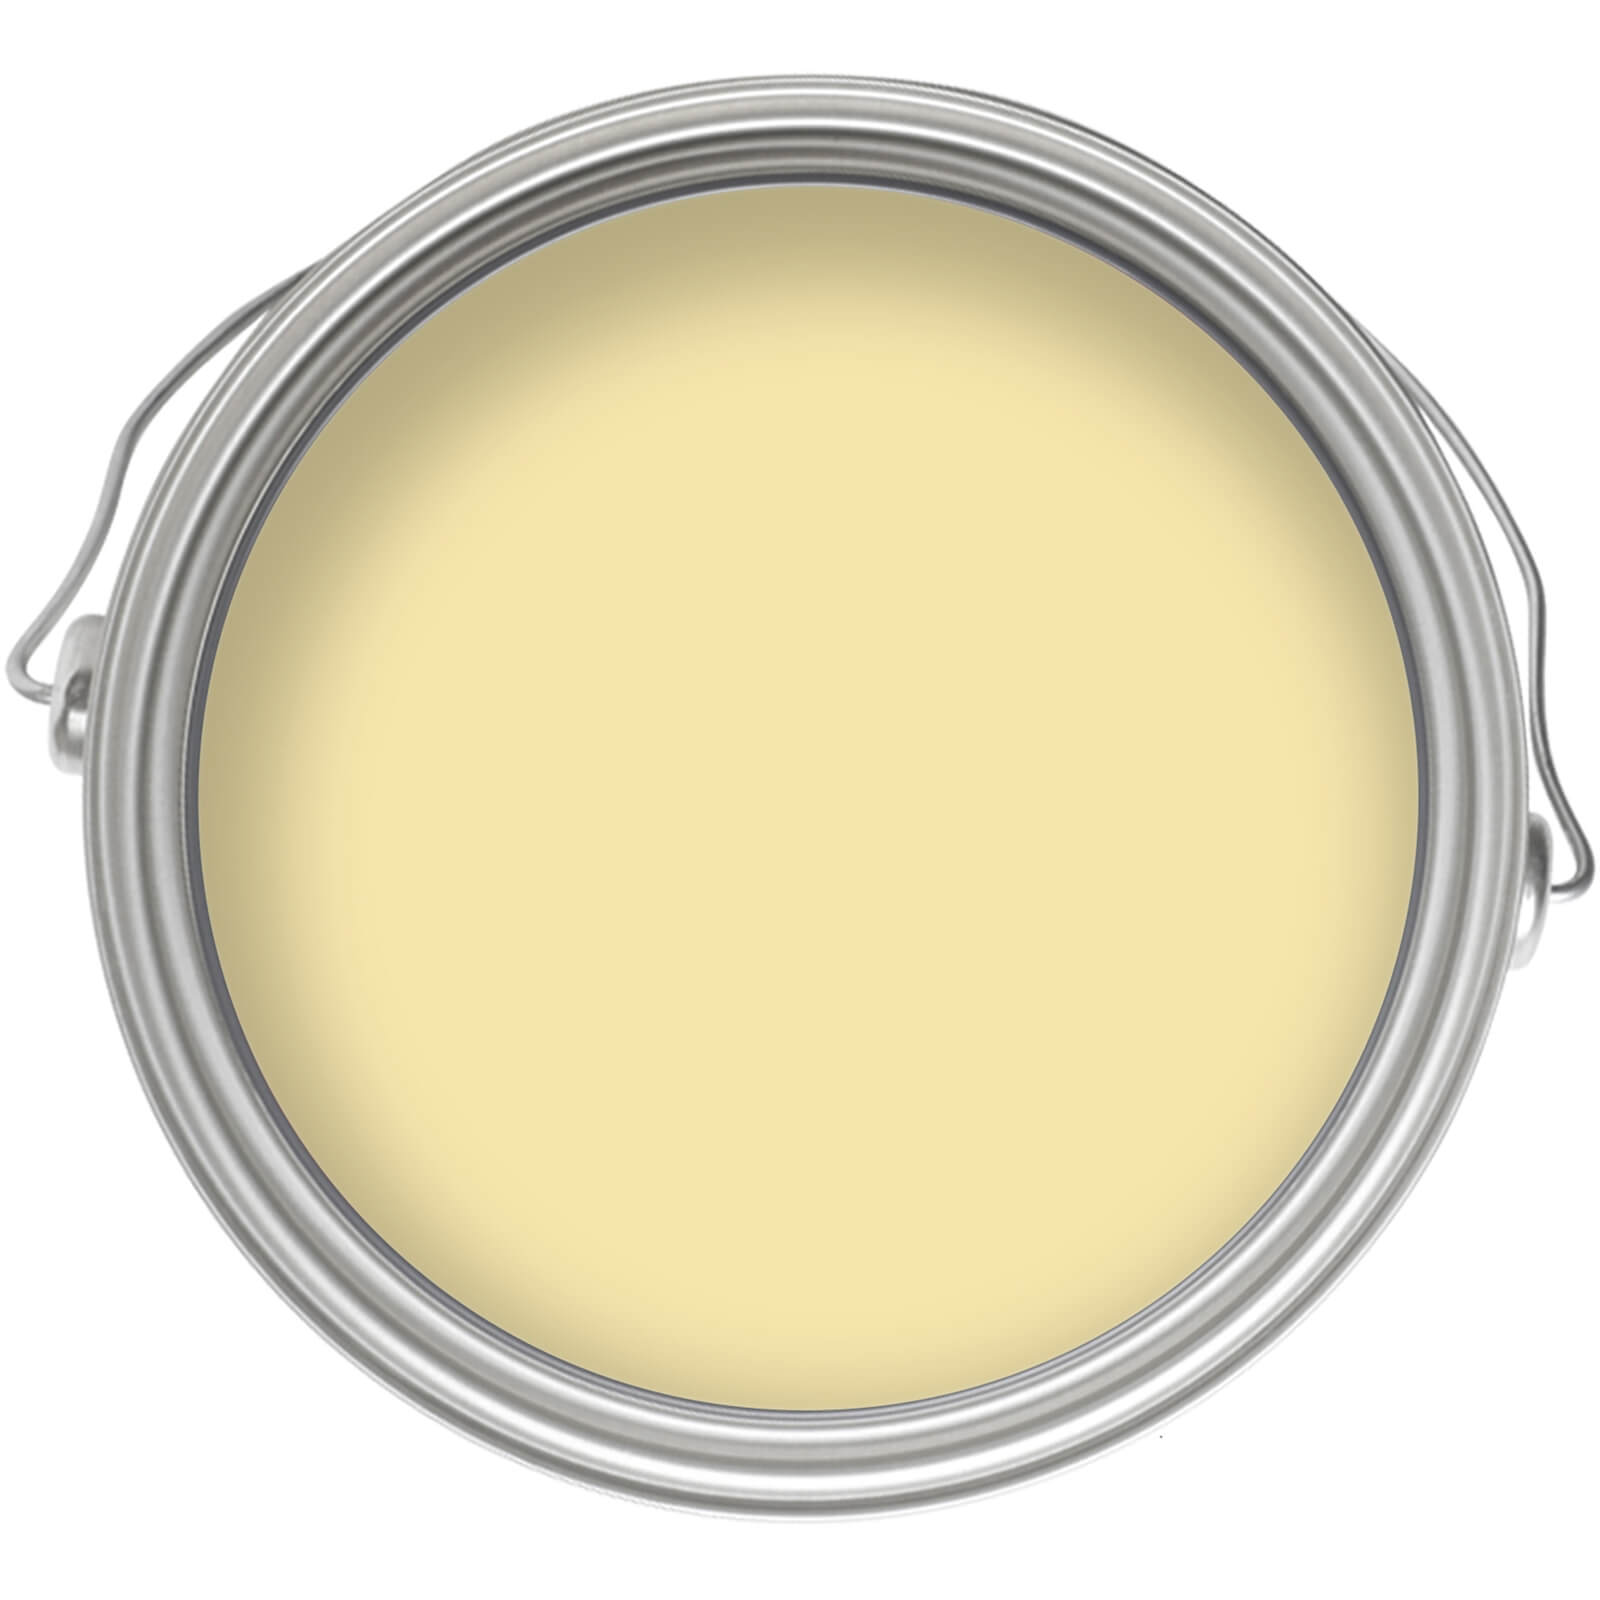 Homebase Silk Emulsion Paint Lemon Souffle - 2.5L